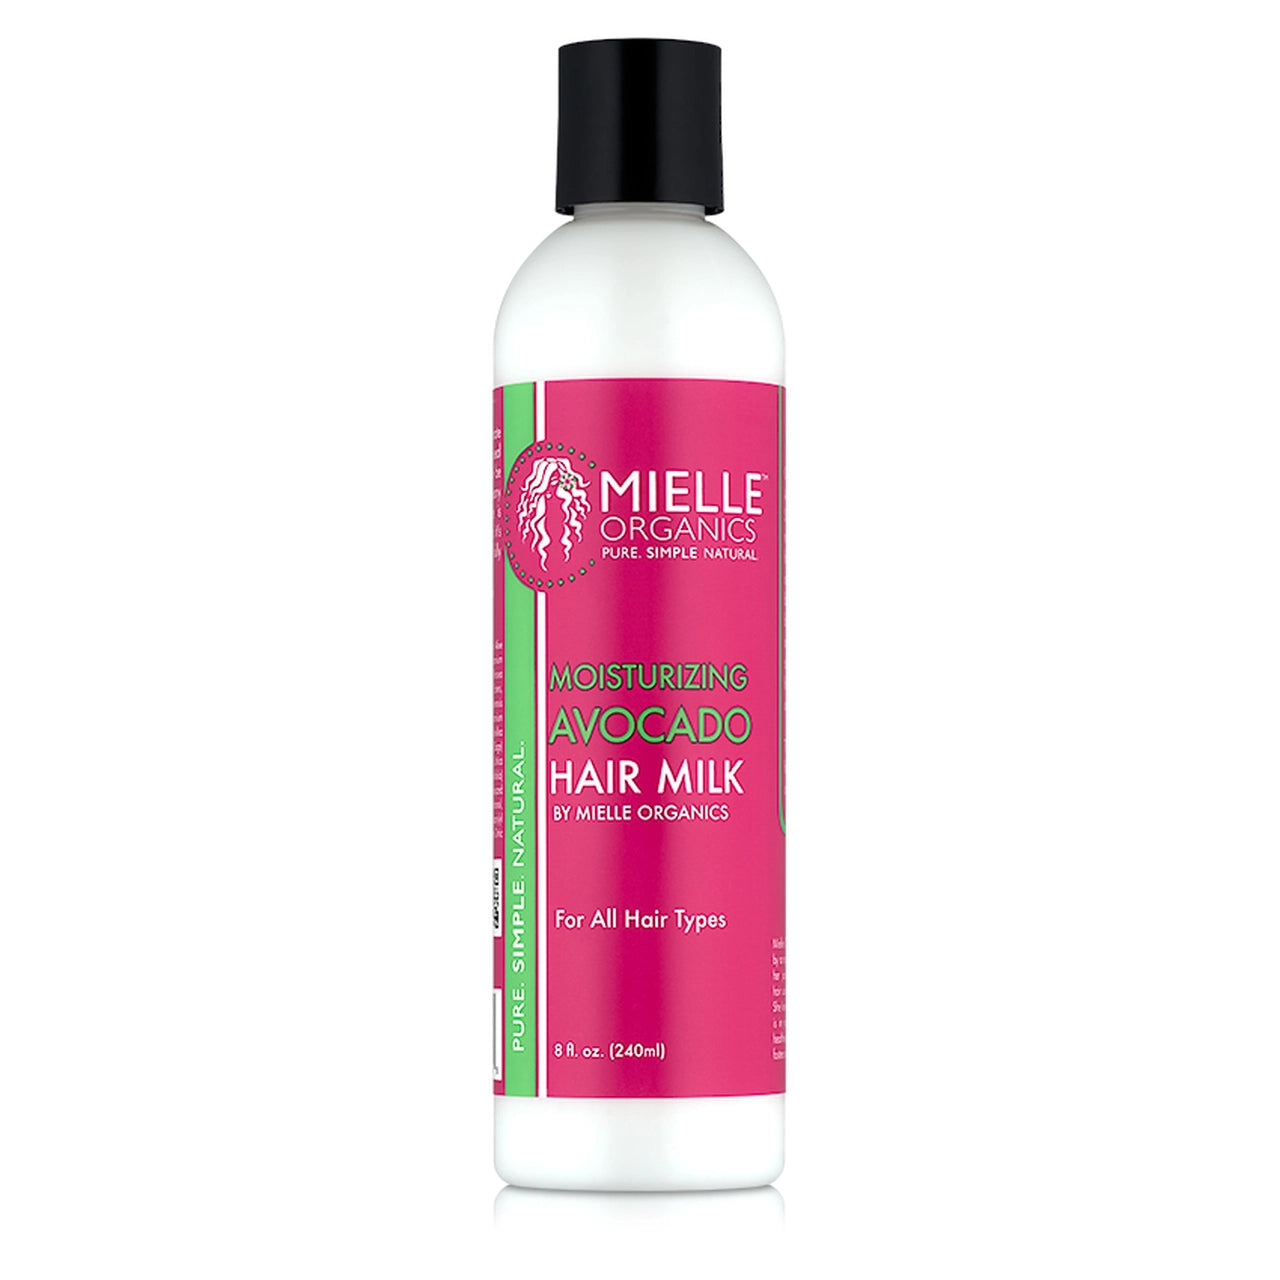 MIELLE AVOCADO HAIR MILK Moisturizing 8oz-Mielle Organics- Hive Beauty Supply